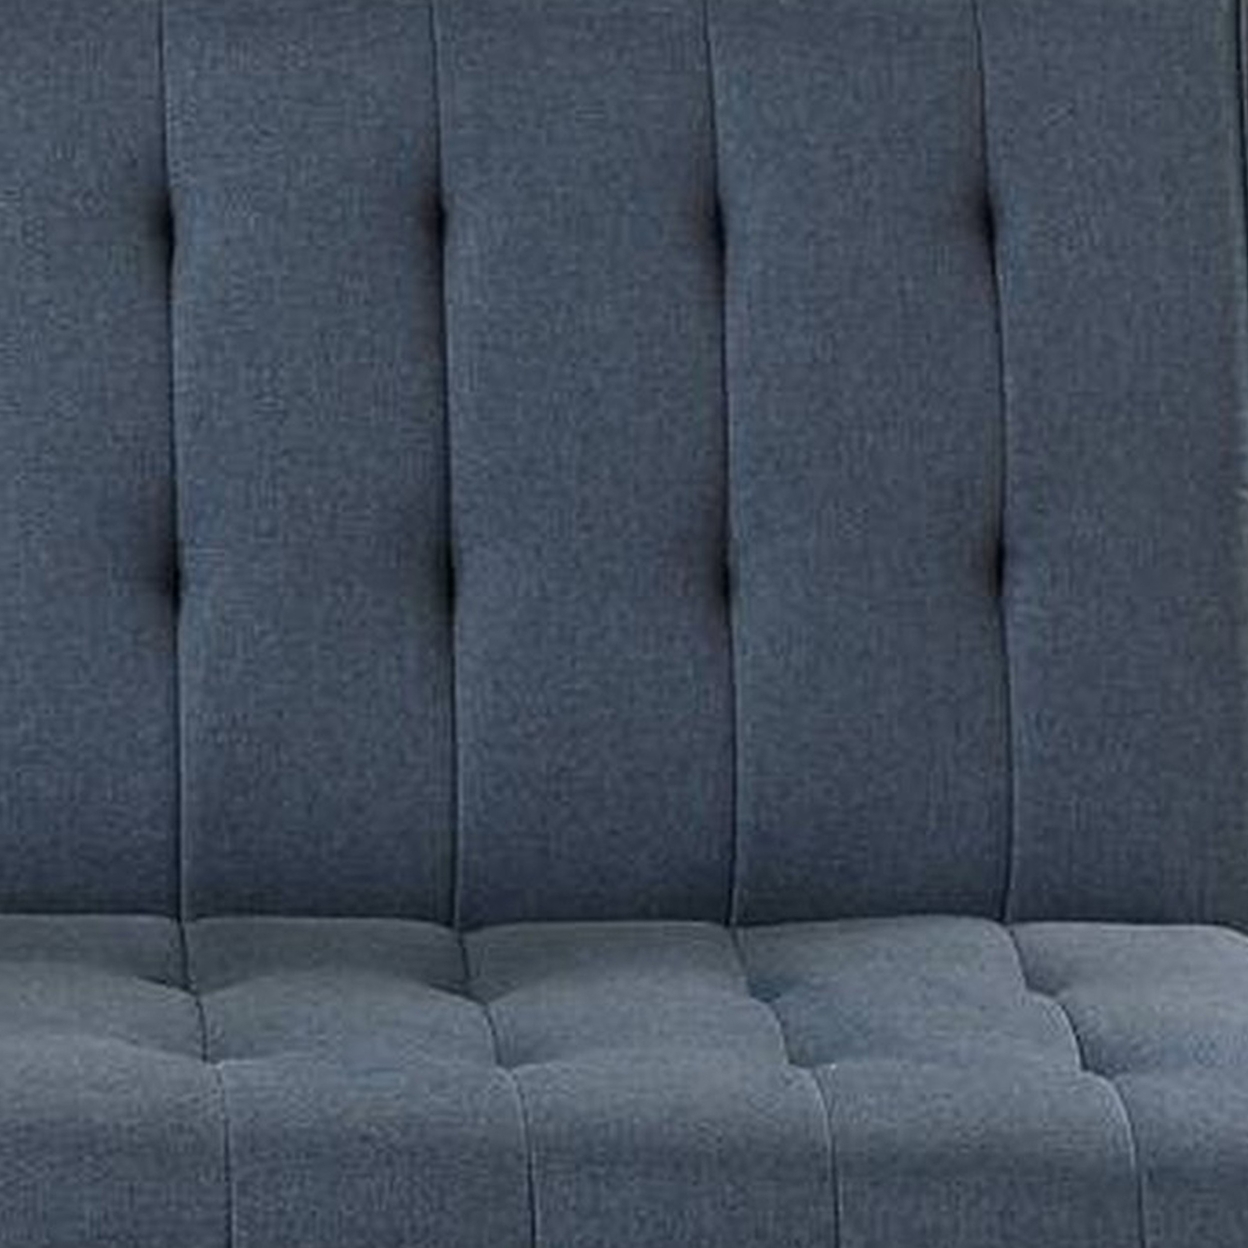 Ara 71 Inch Adjustable Futon Sofa Bed, Plush Cushioning, Tapered Legs, Blue- Saltoro Sherpi